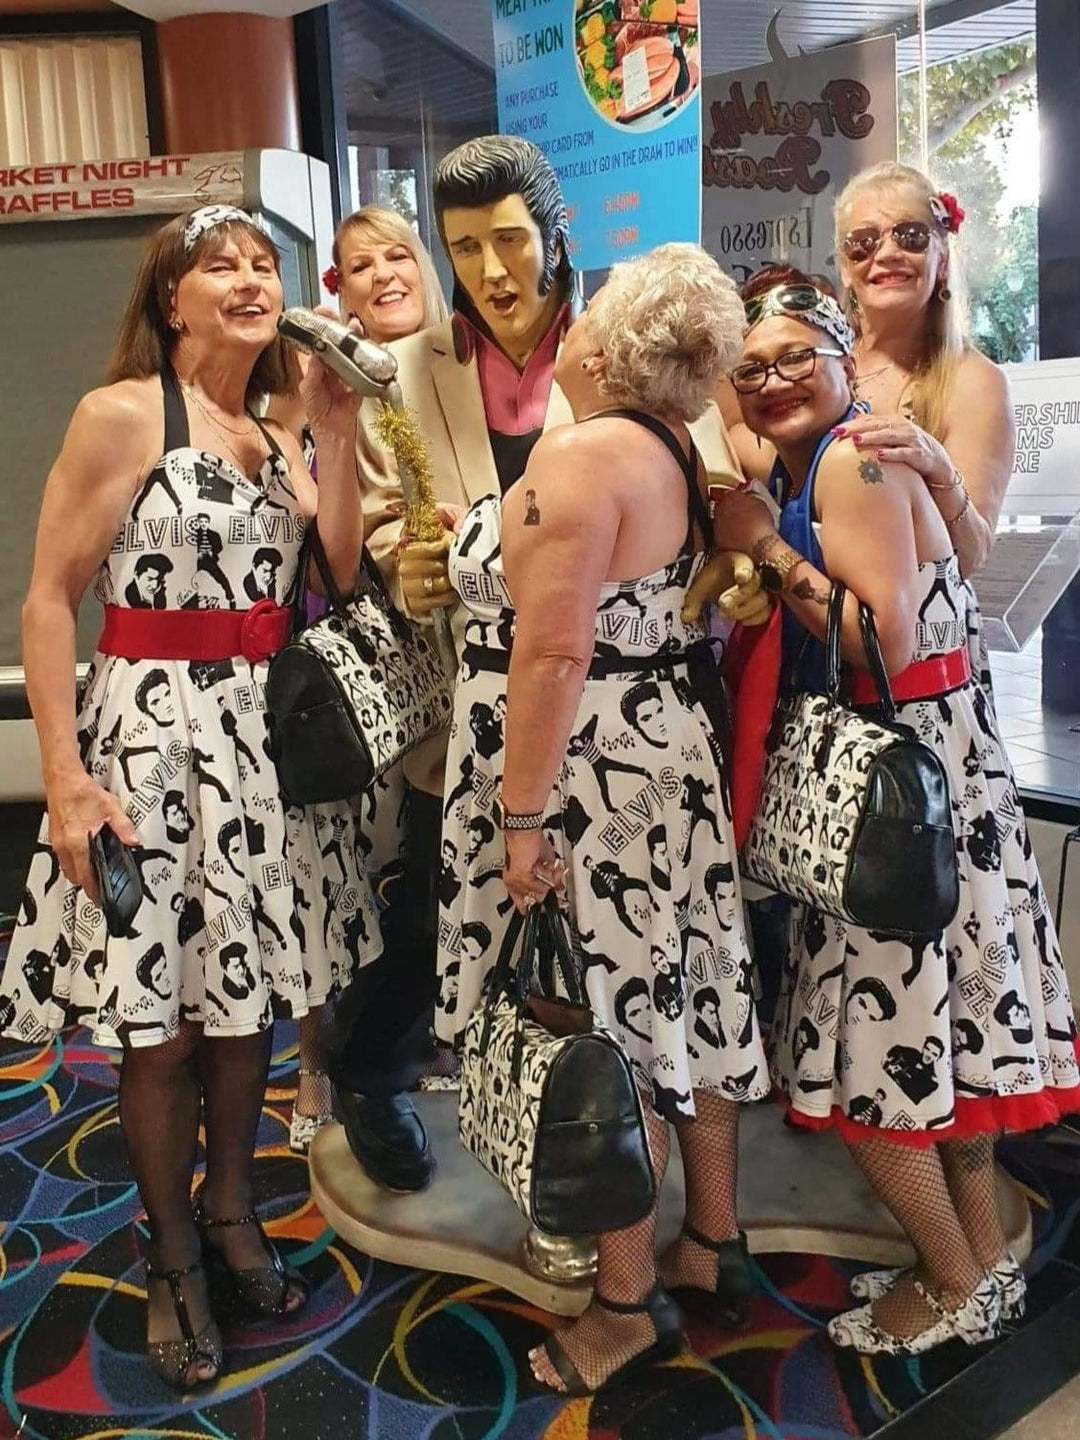 Elvis Halter Party Swing Dress